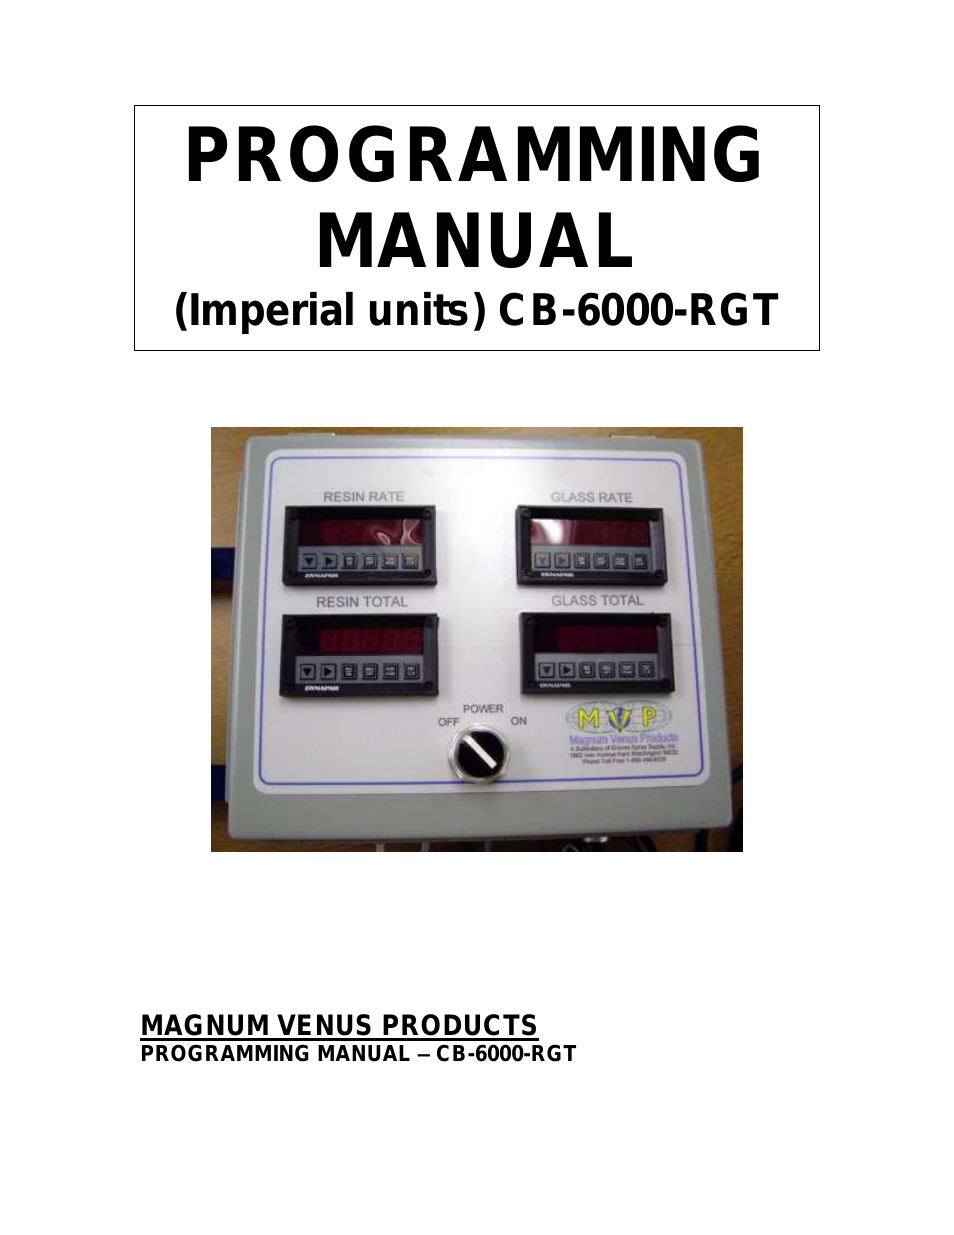 CB-6000-RGT Imperial units PROGRAMMING